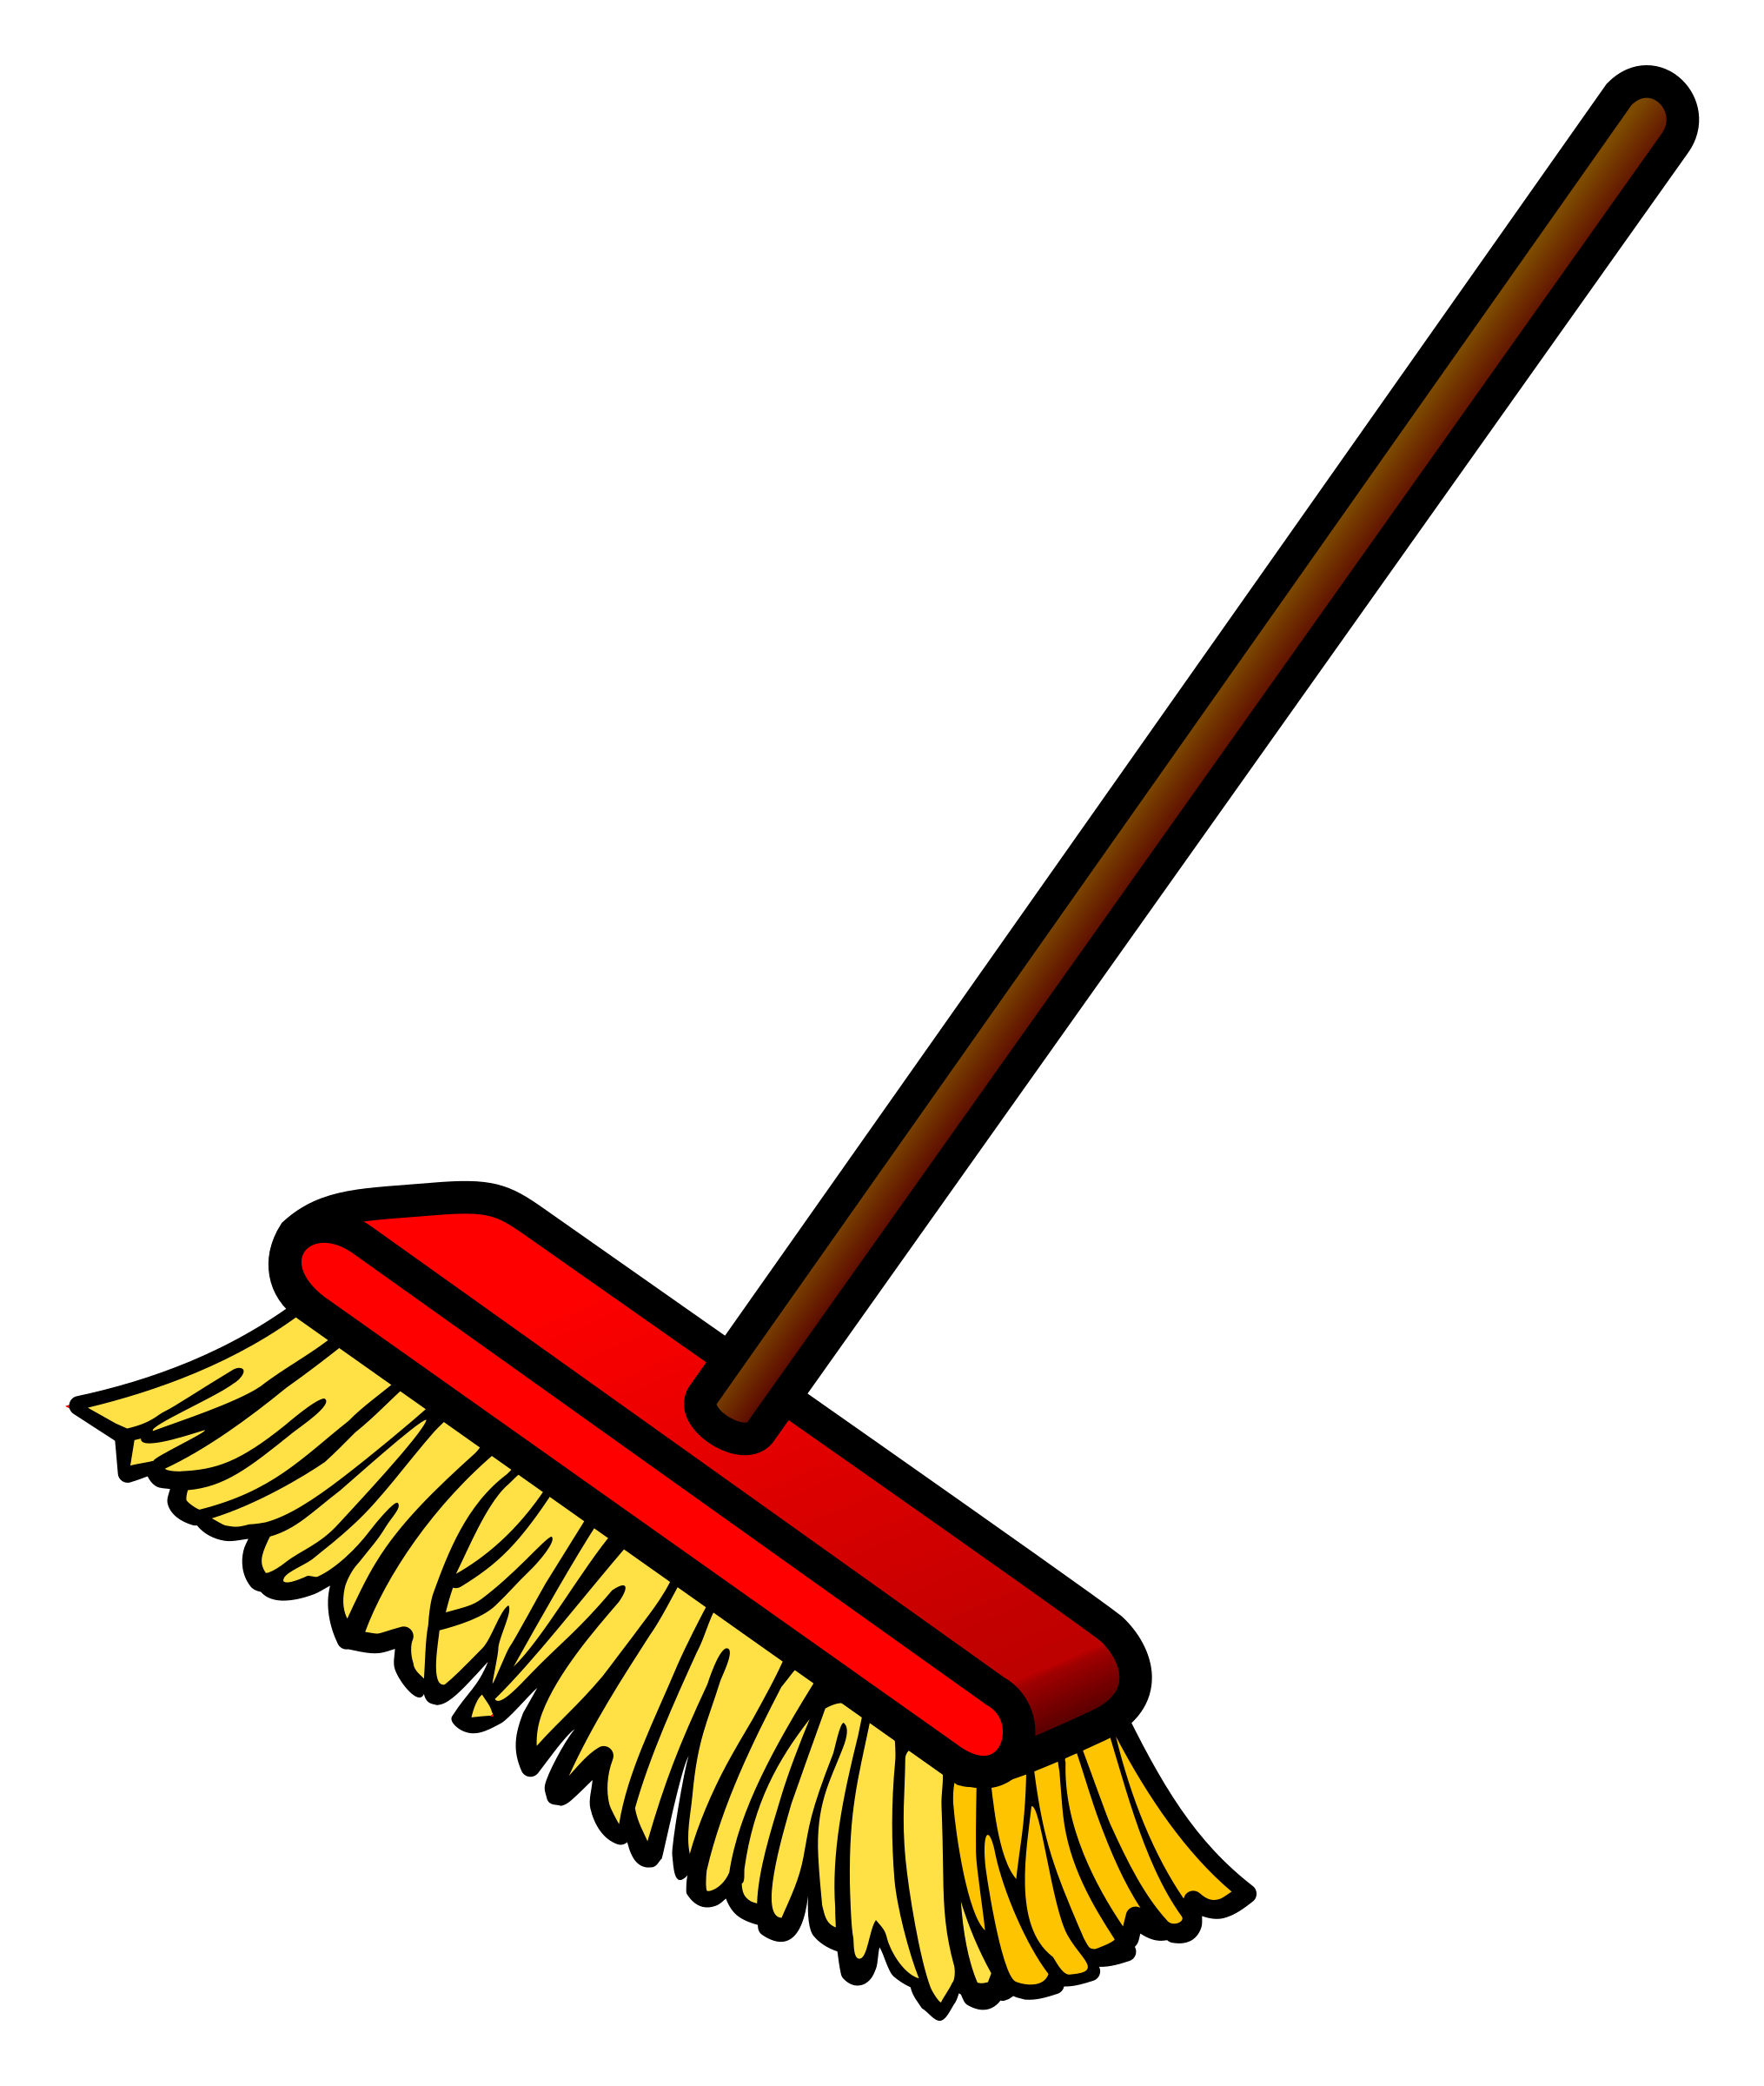 broom clipart walis